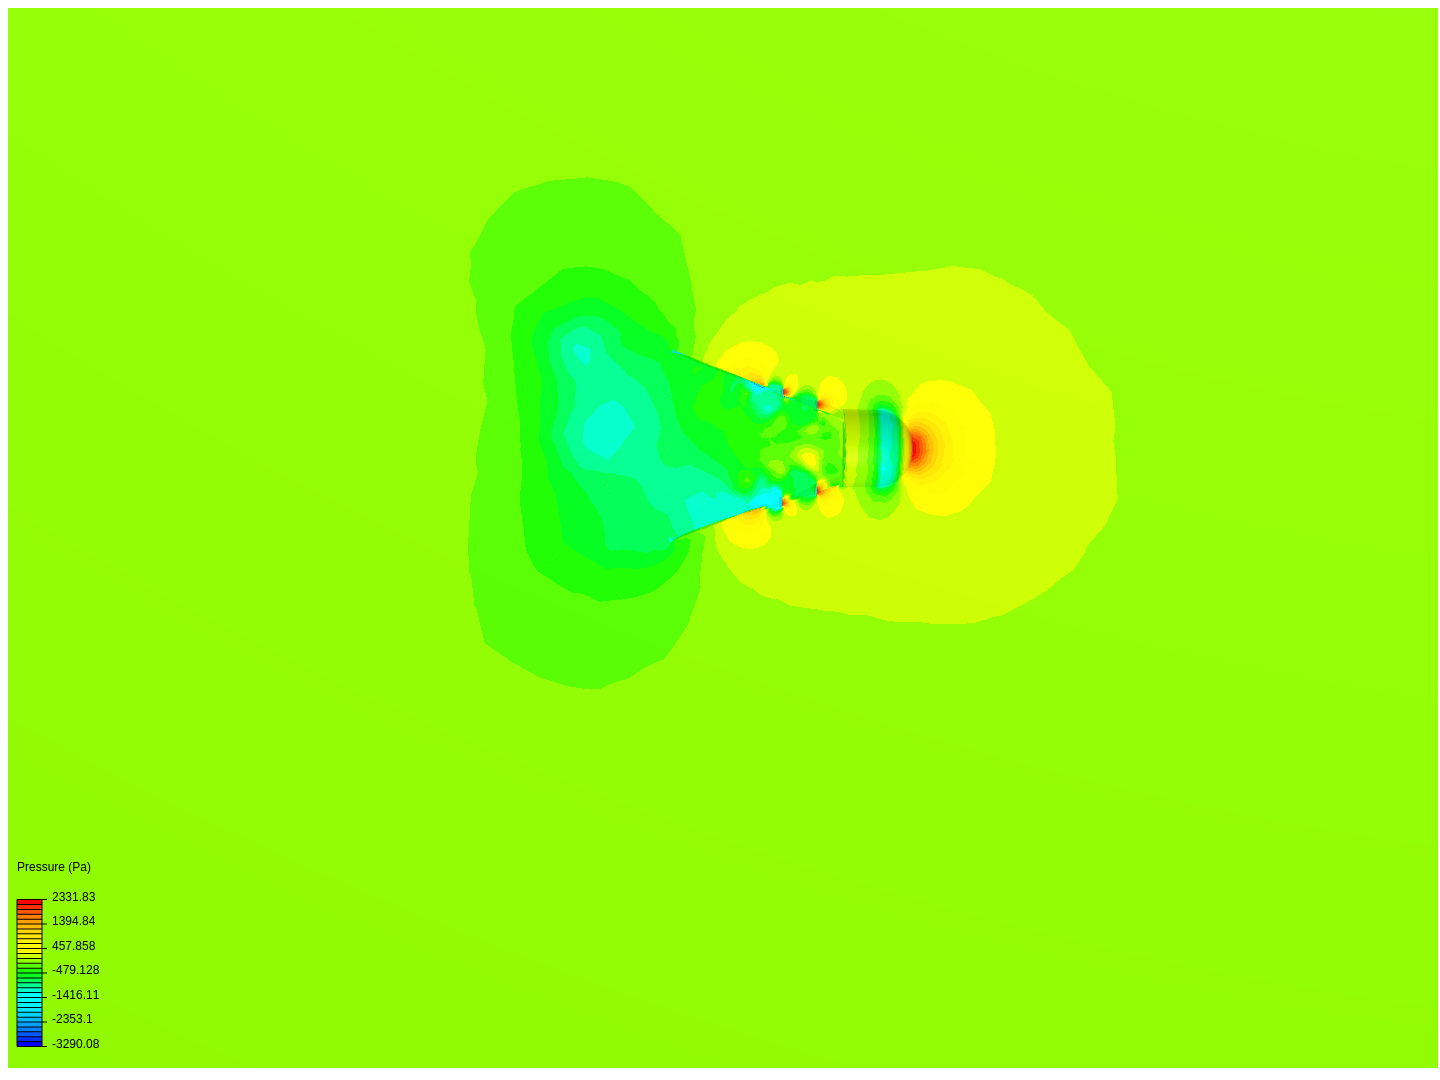 feather simulation image